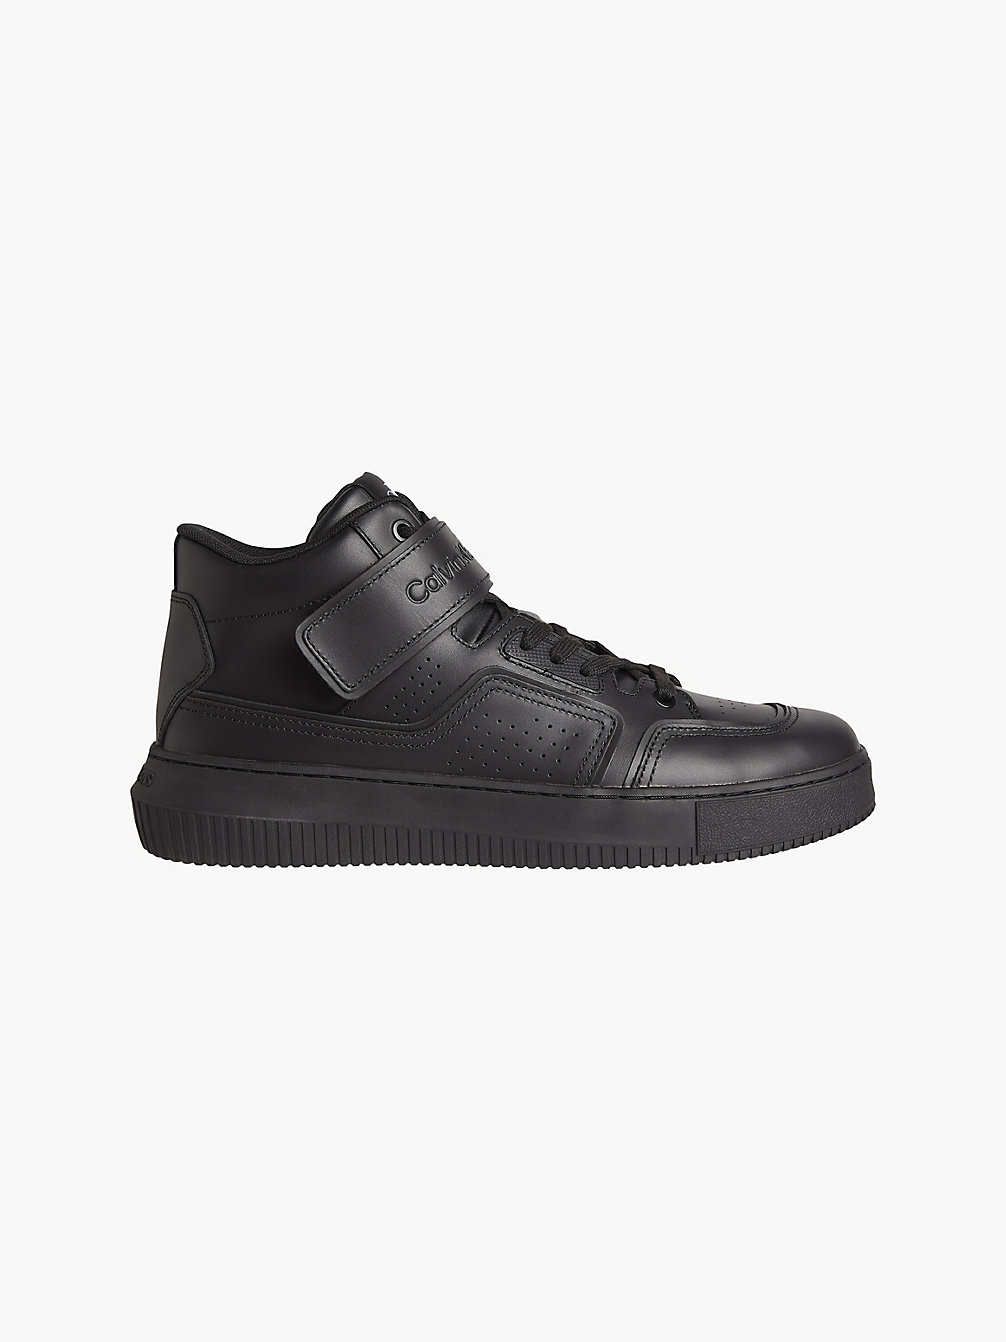 TRIPLE BLACK High Top Sneakers Aus Leder undefined Herren Calvin Klein